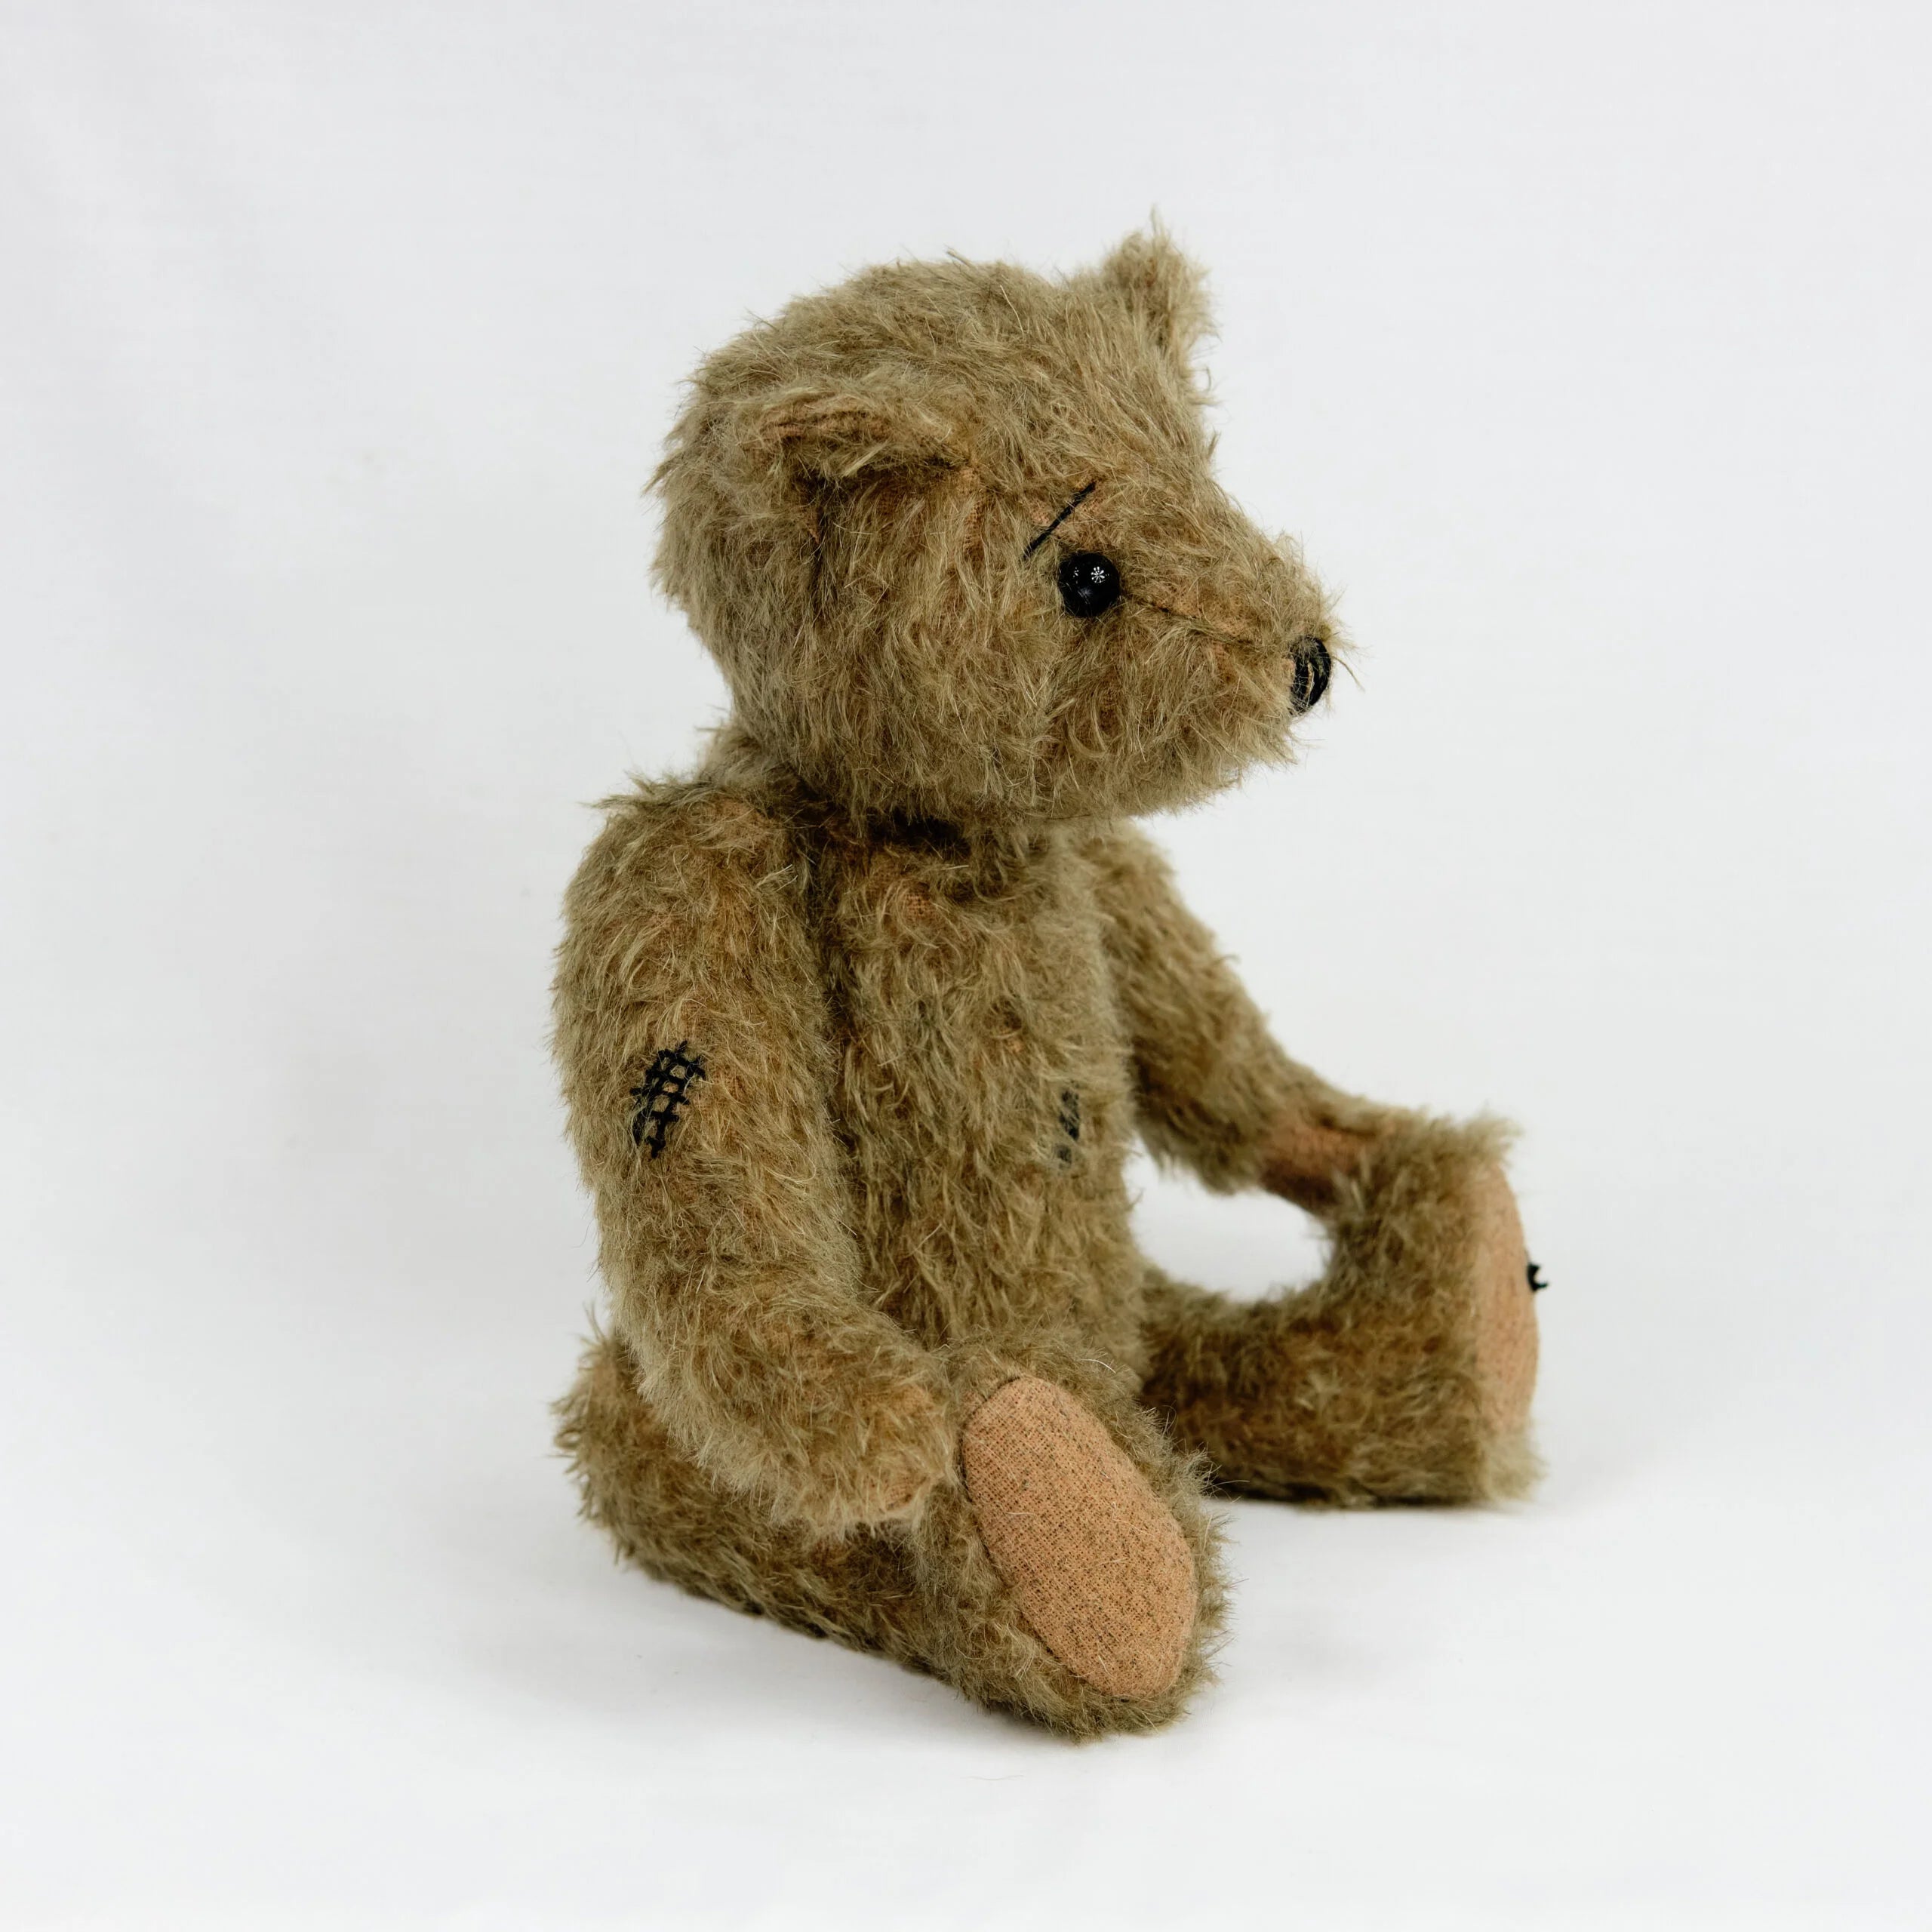 Canterbury Bears  Handmade Teddy Bears & Friends